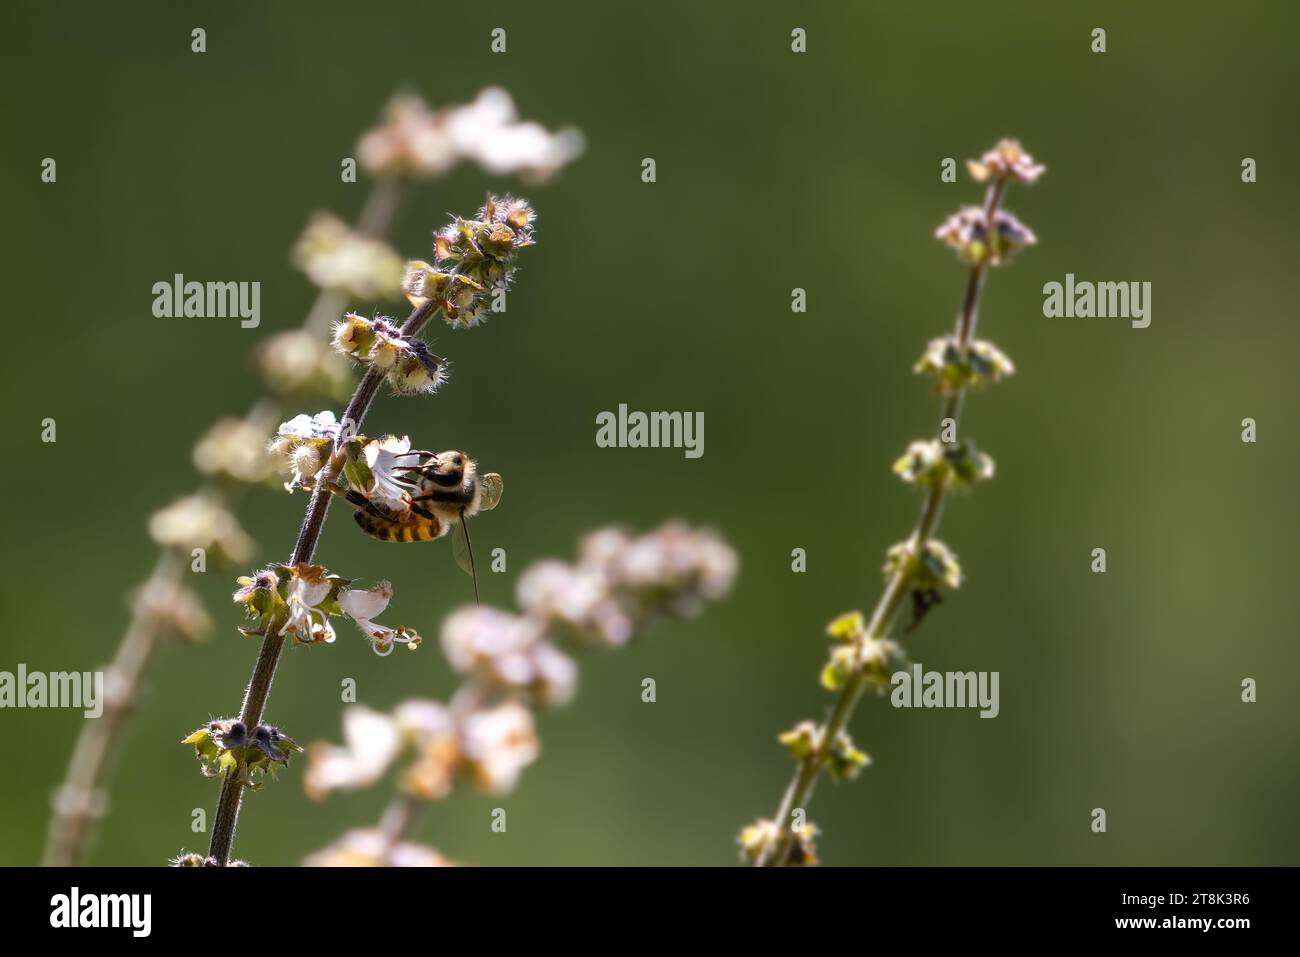 Honey Bee on a Flower Stock Photo